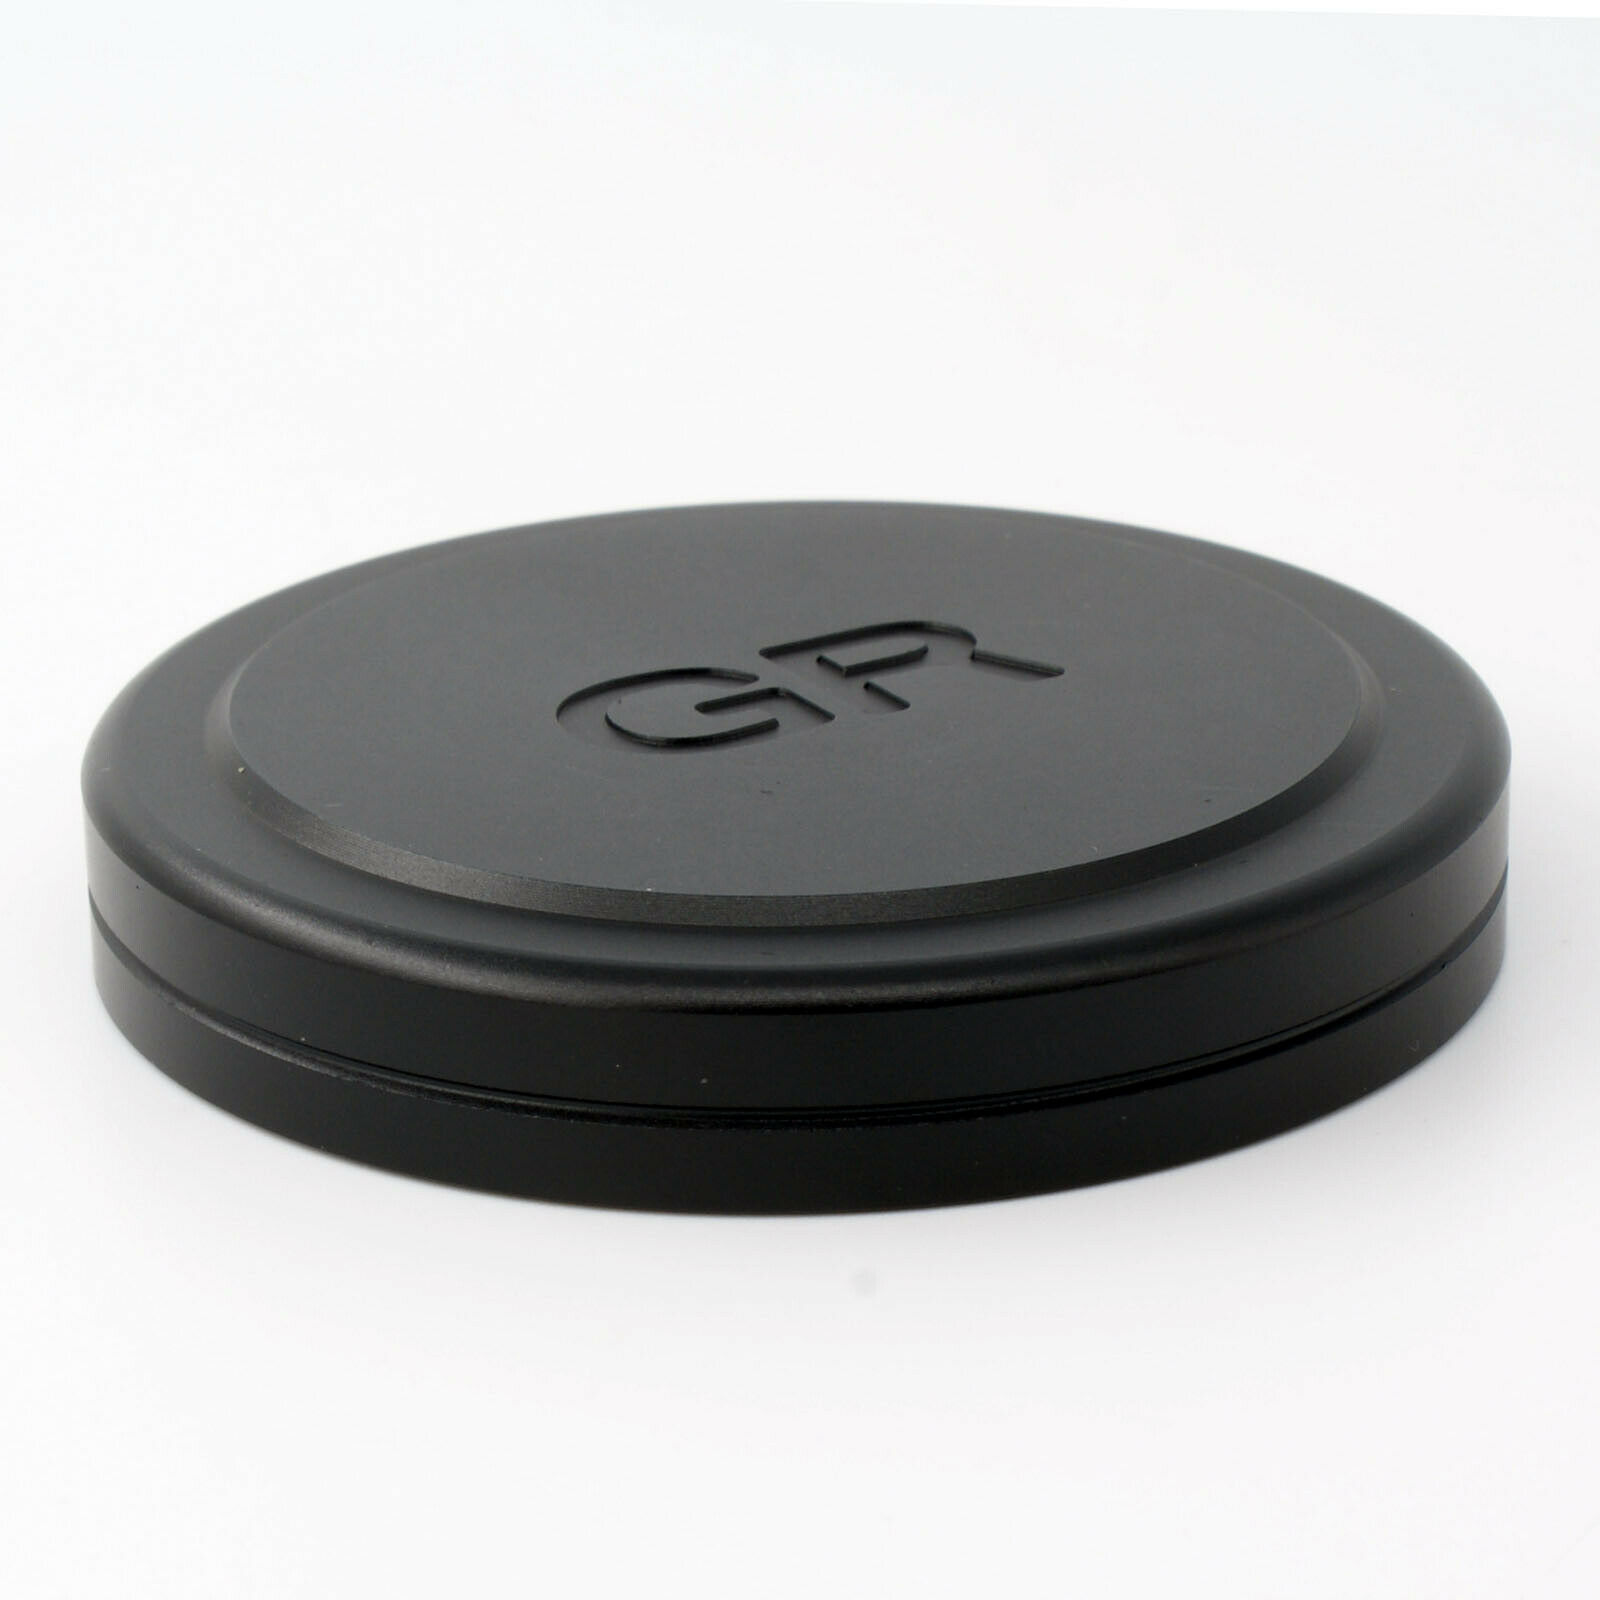 Camera Accessories Lens Cap Cover For Ricoh GR III / GR II / GR2 / GR3 Cameras Lens Protector